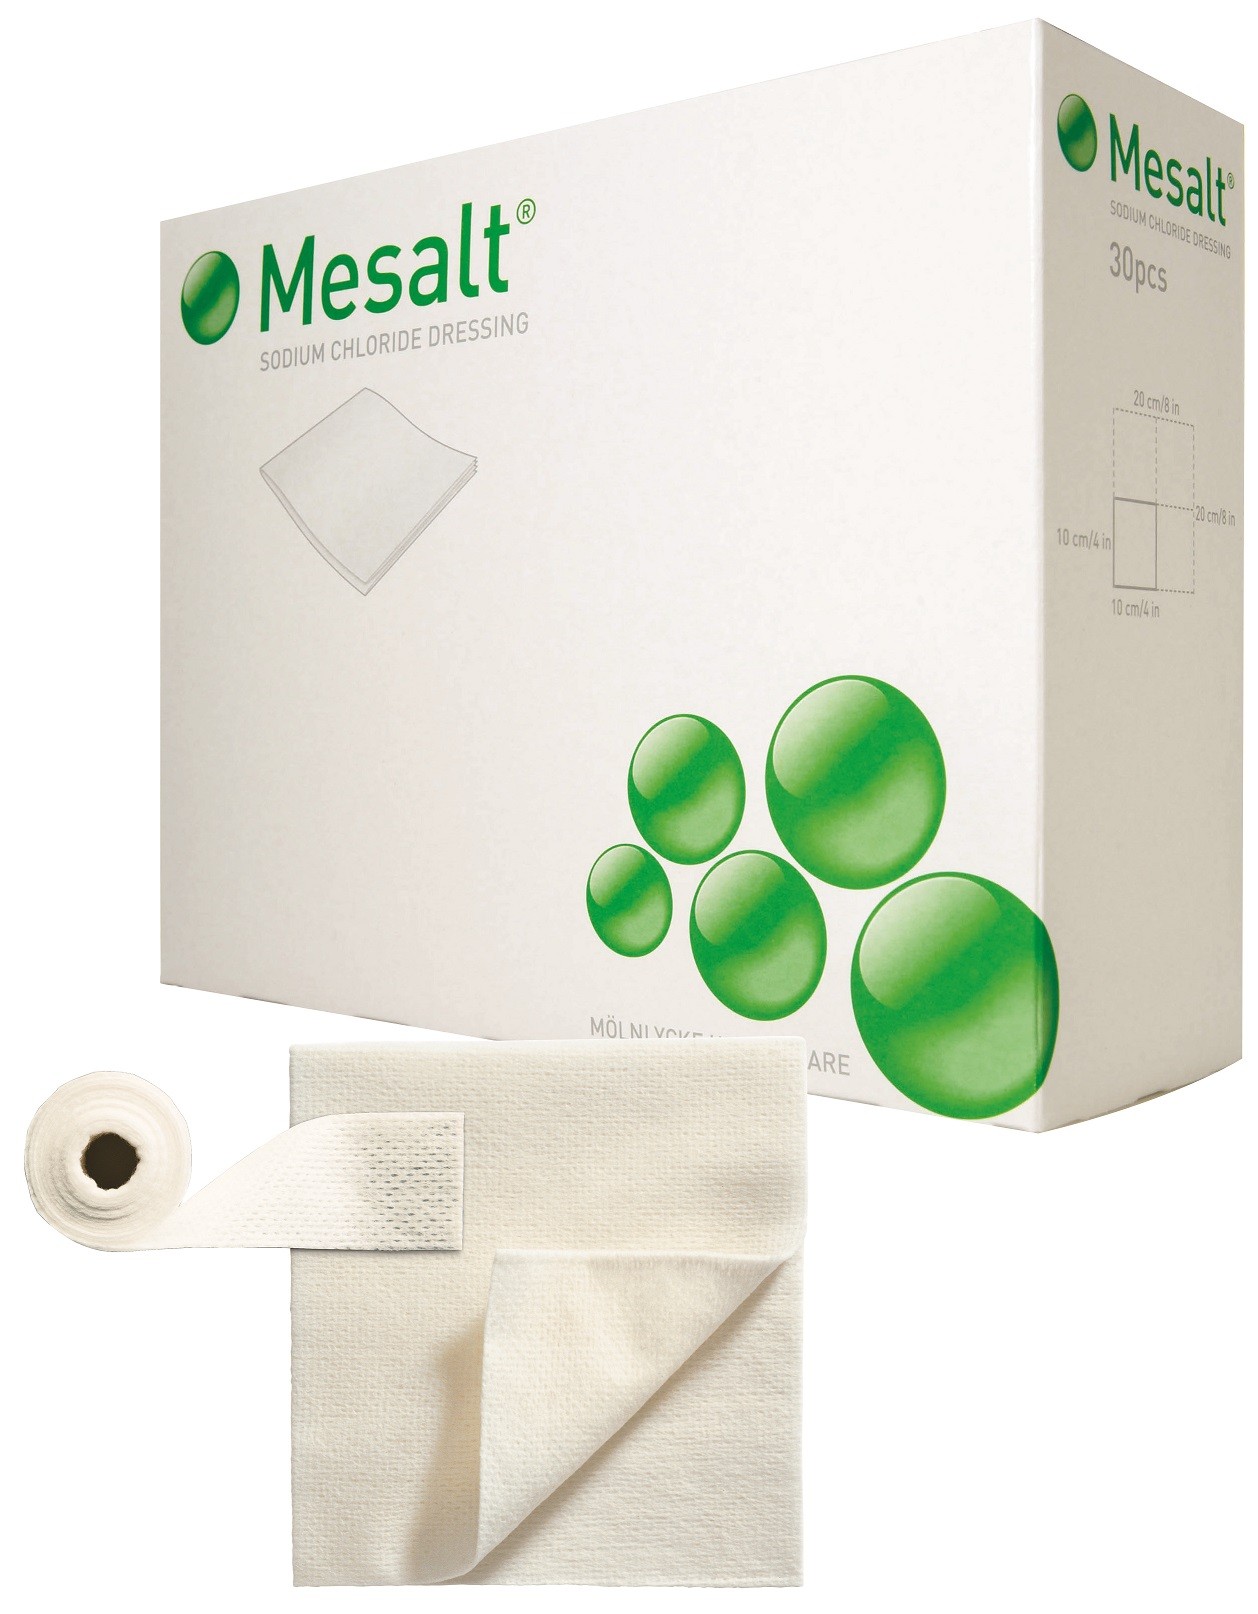 Mesalt® Dressing - 5 x 5 cm